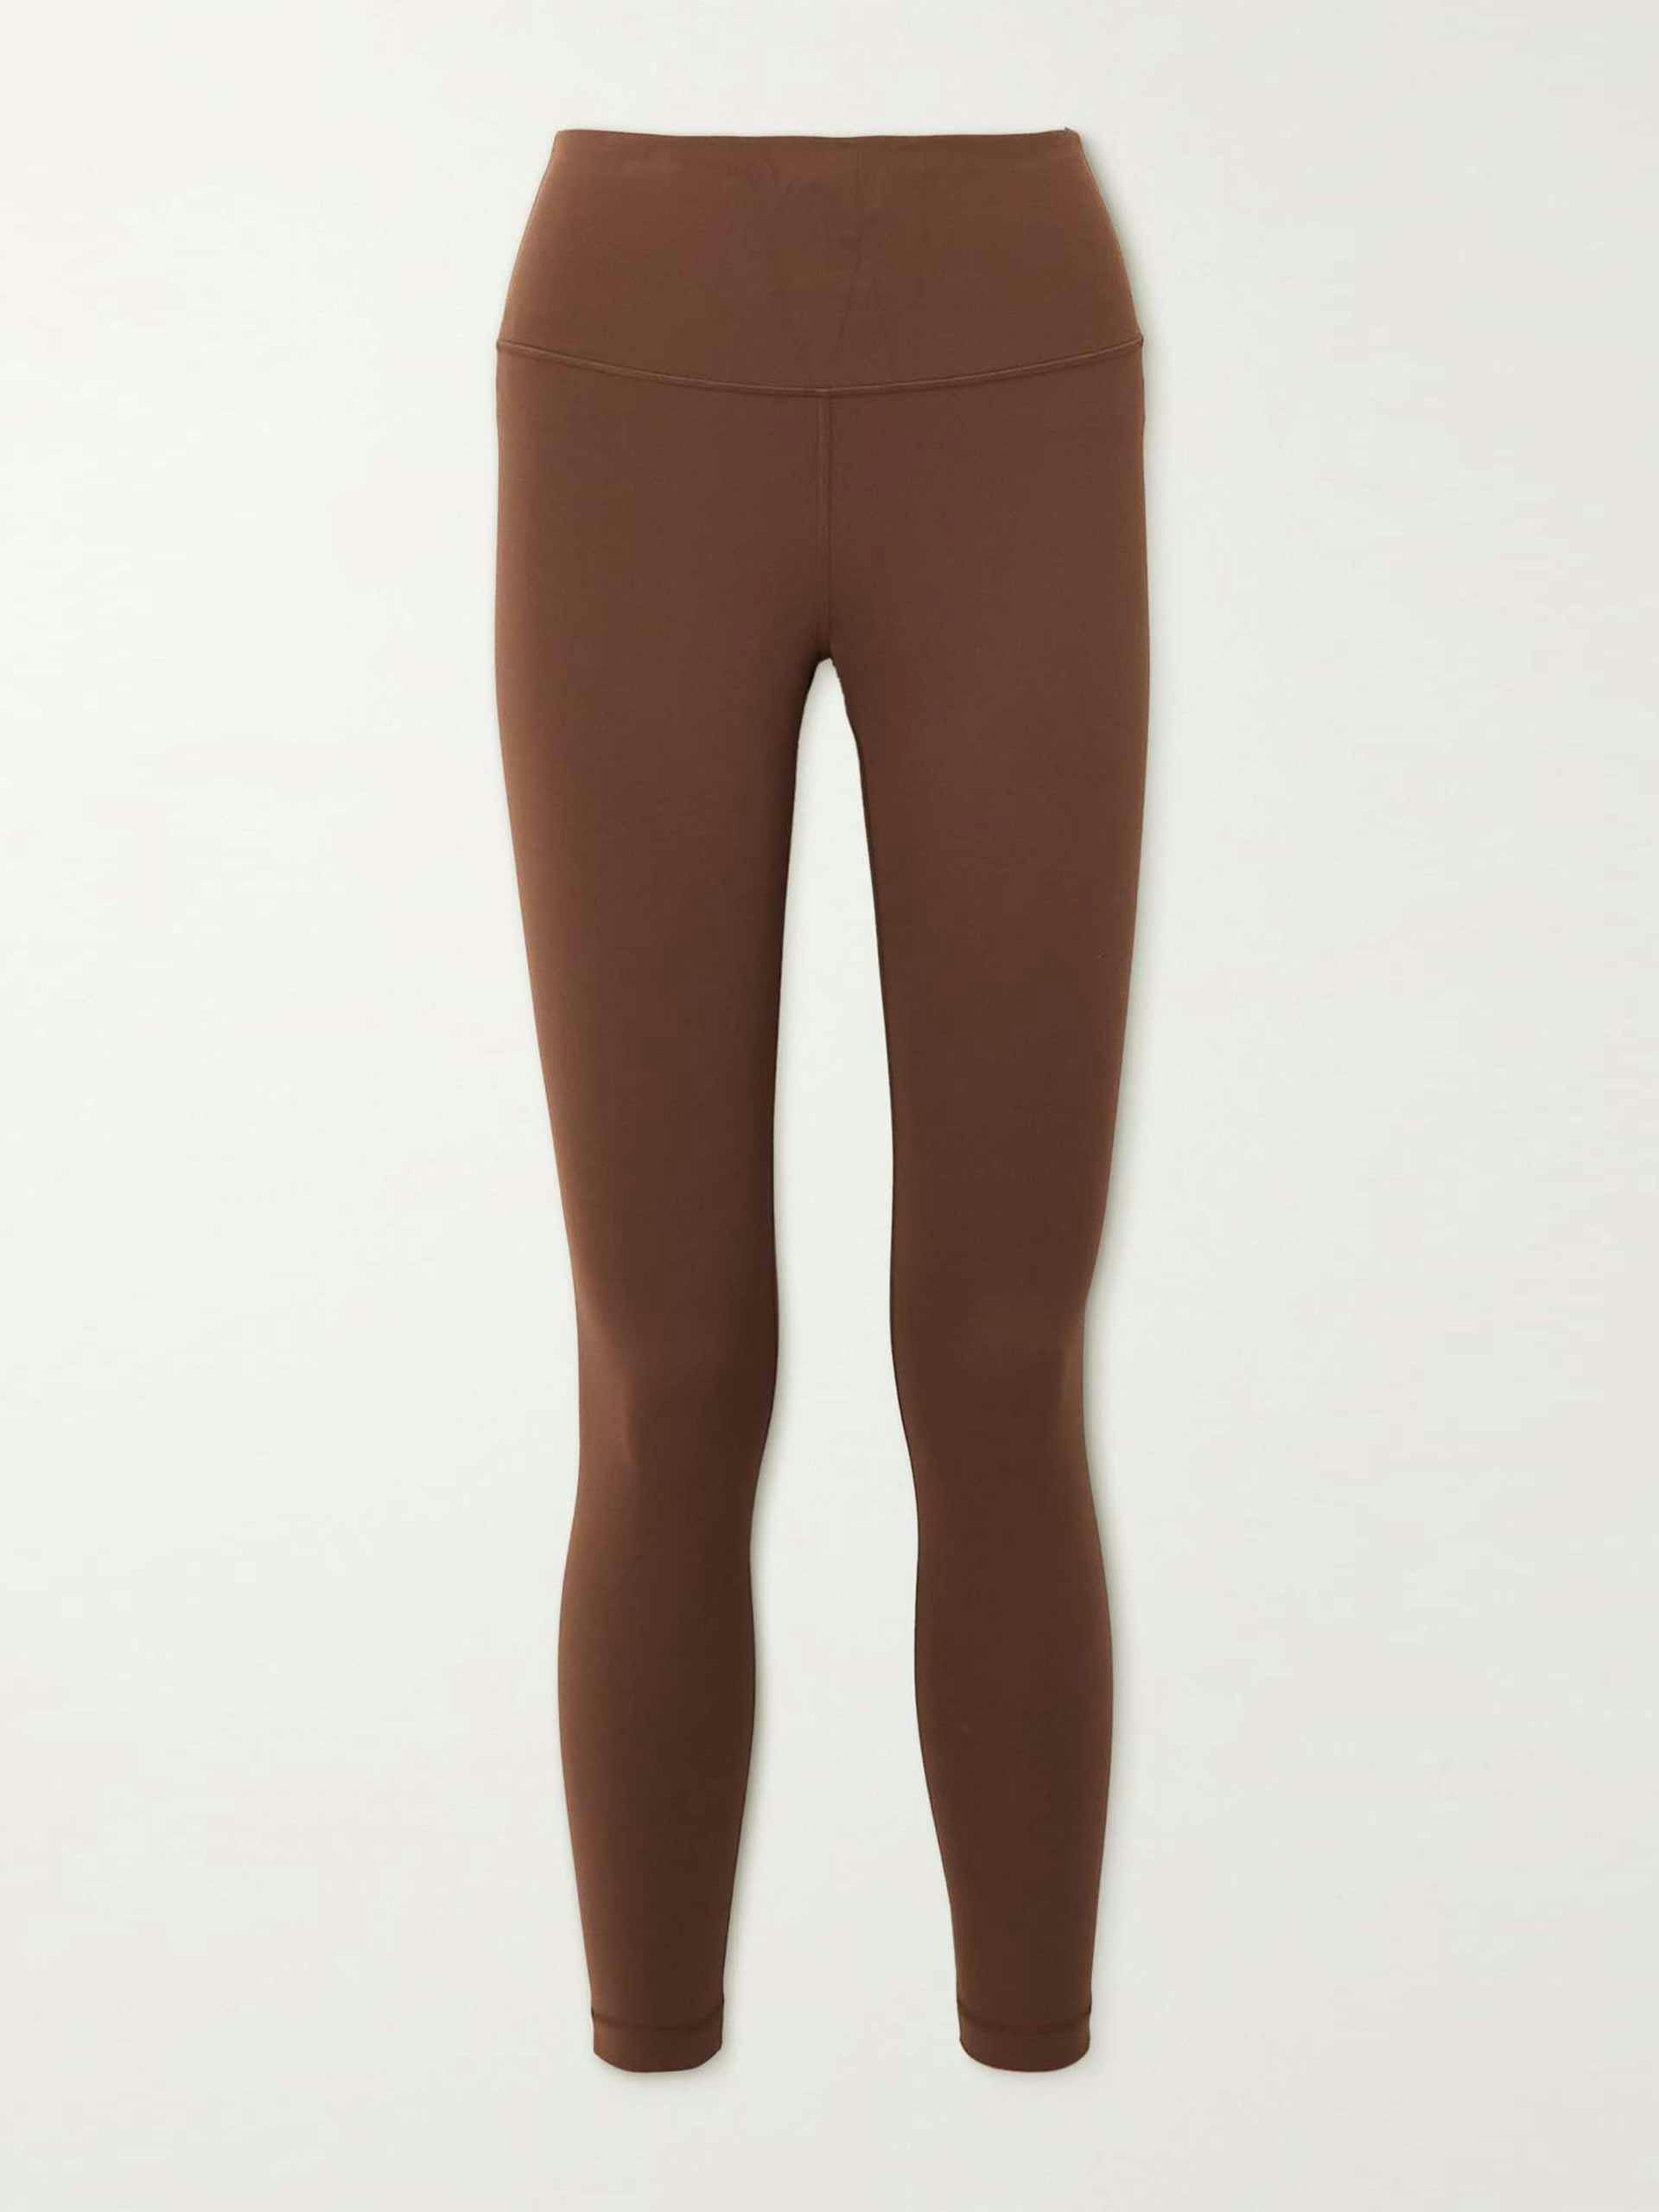 Brown stretch leggings